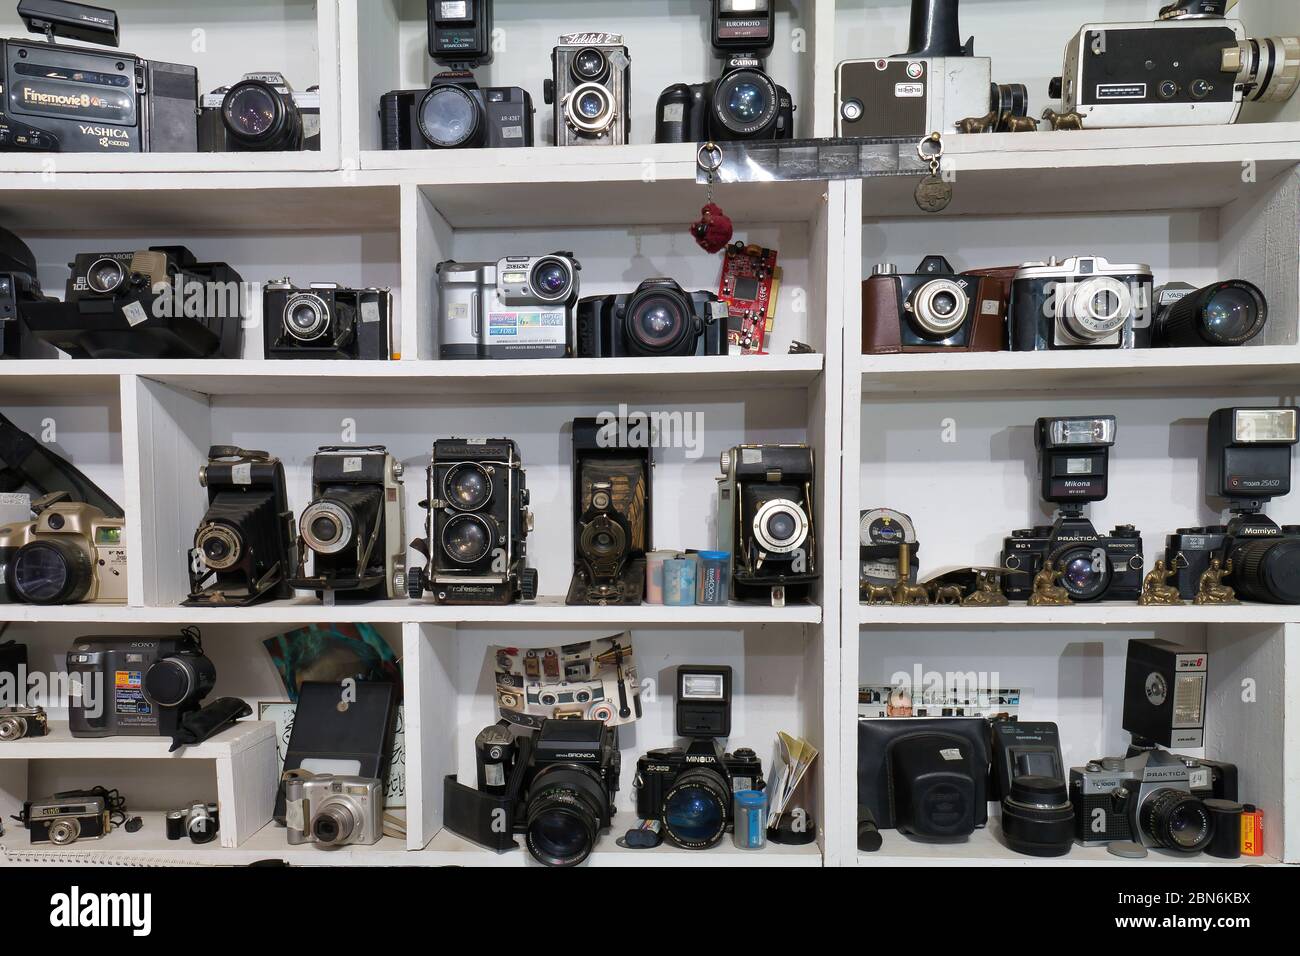 Colección de cámaras fotográficas fotografías e imágenes de alta resolución  - Alamy